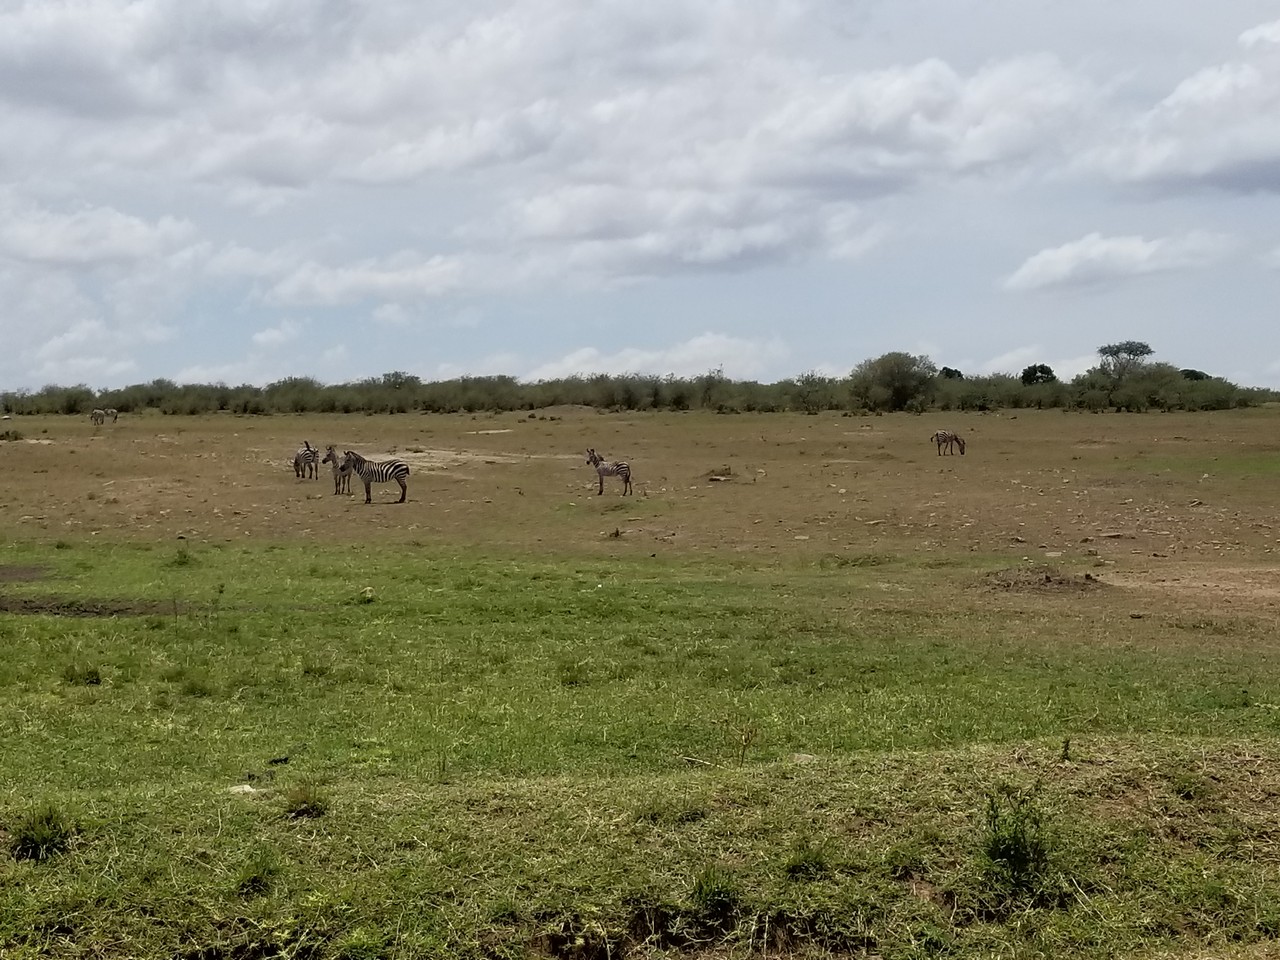 a group of zebras in a field